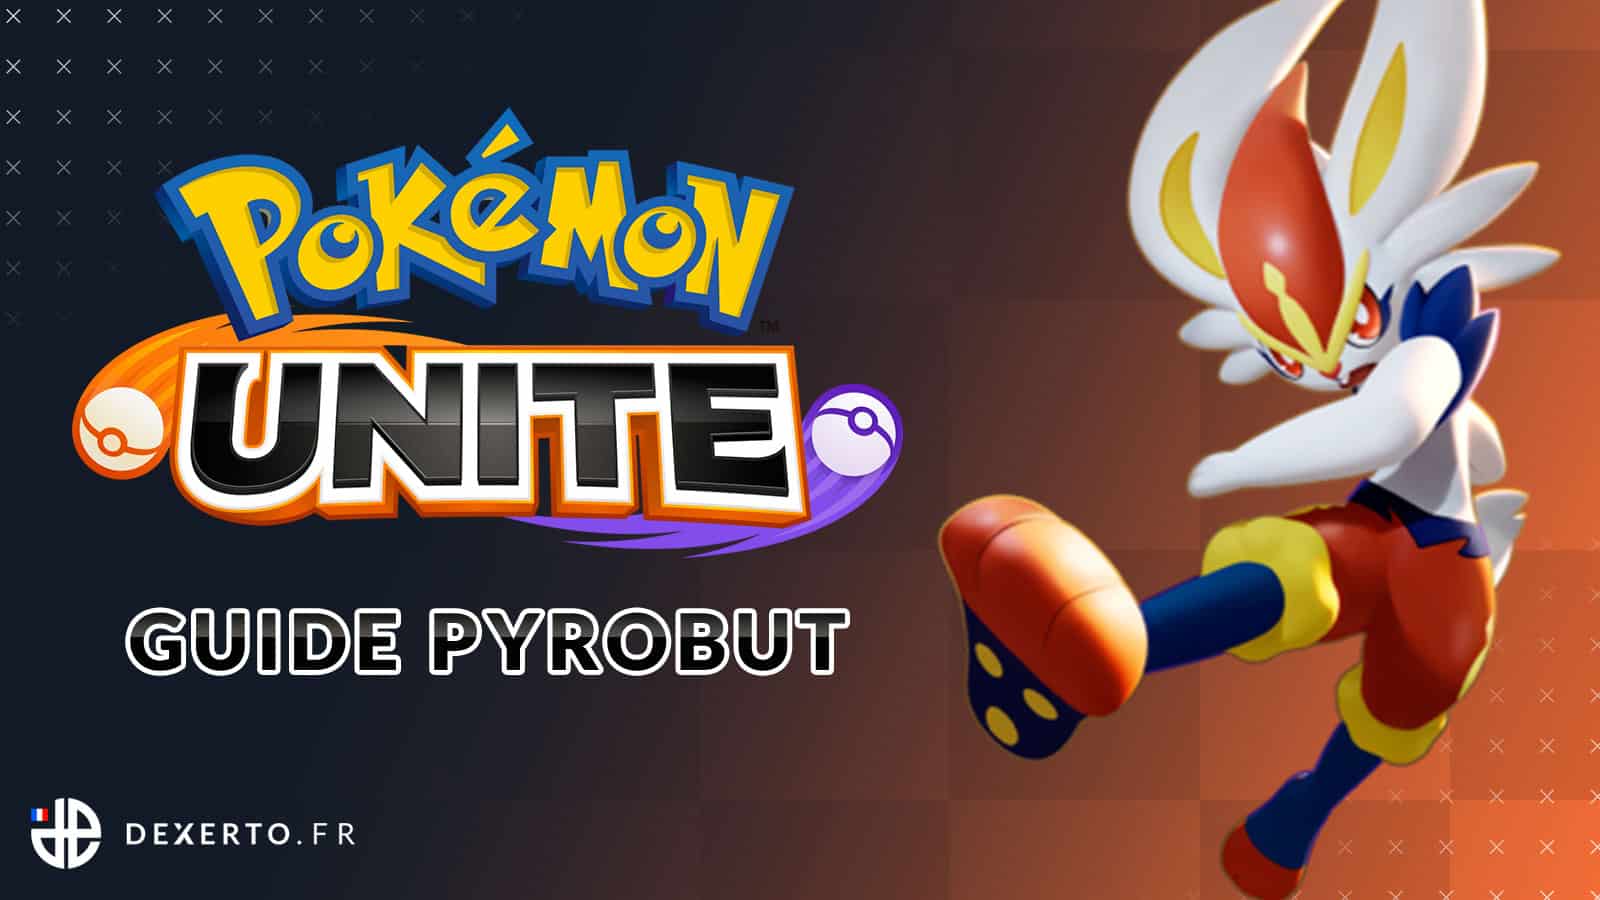 Pokémon Unite guide Pyrobut